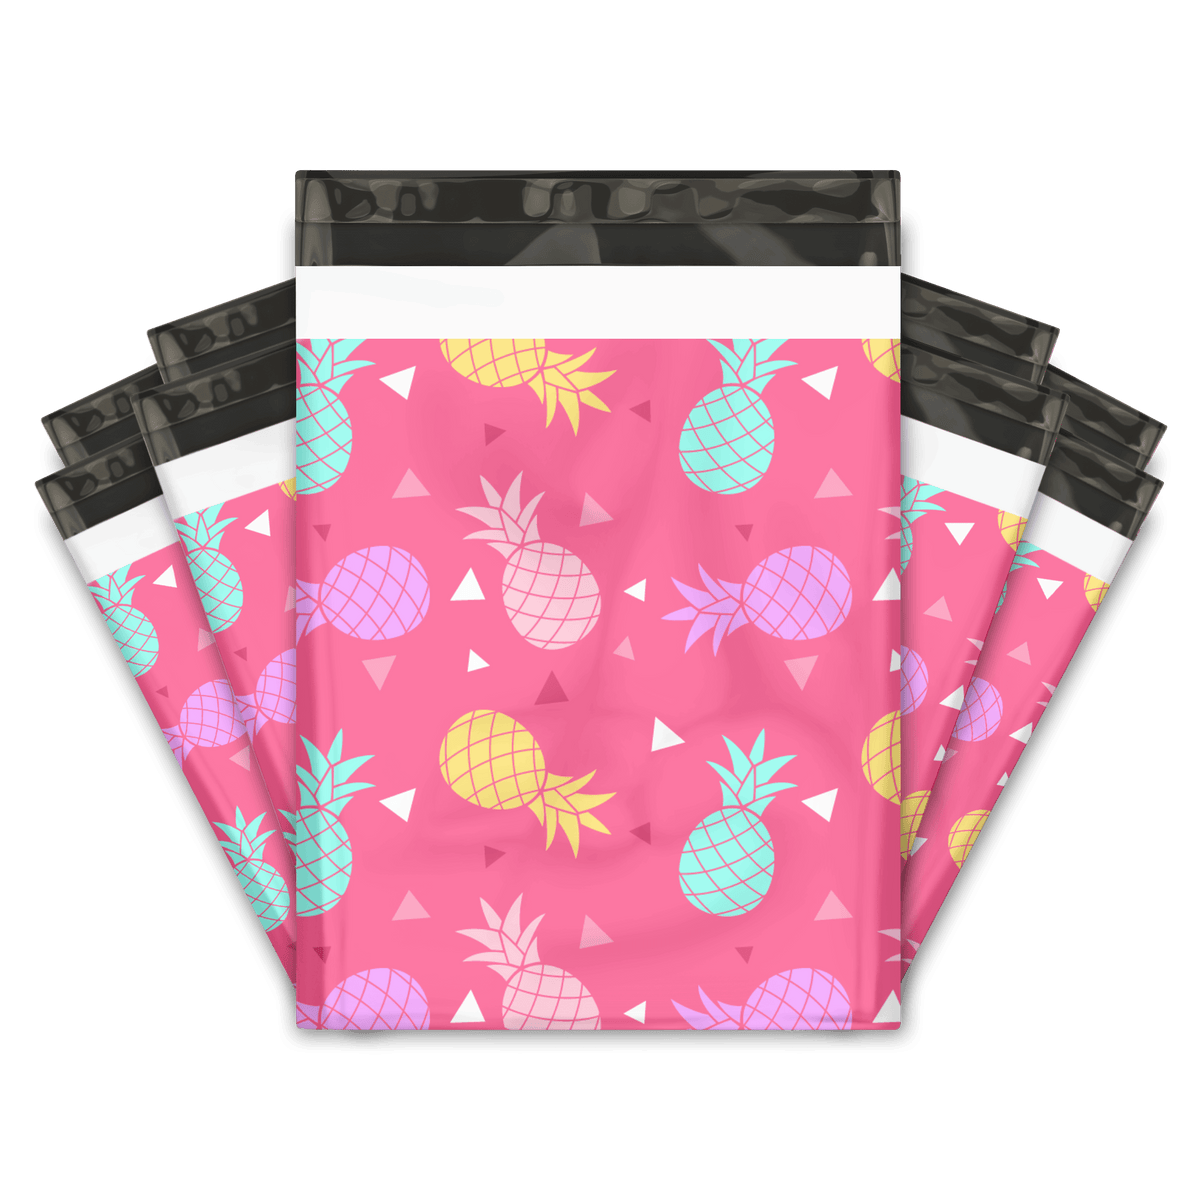 Free Shipping Worldwide! Pink Pineapple Leggings - Cute Pineapple